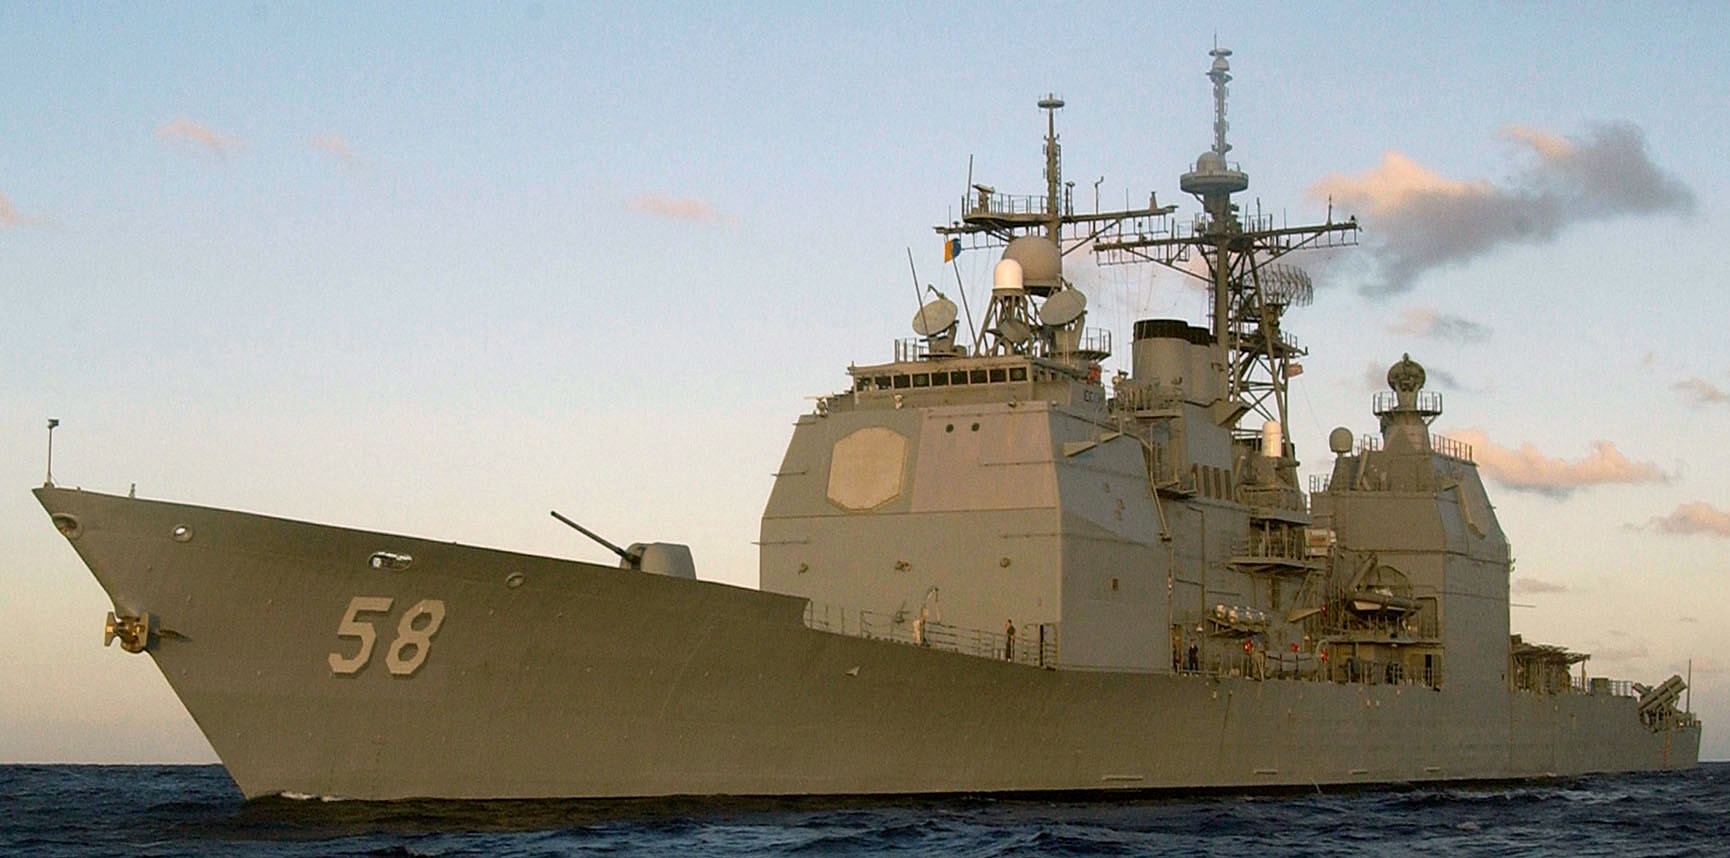 cg-58 uss philippine sea ticonderoga class guided missile cruiser aegis us navy 08